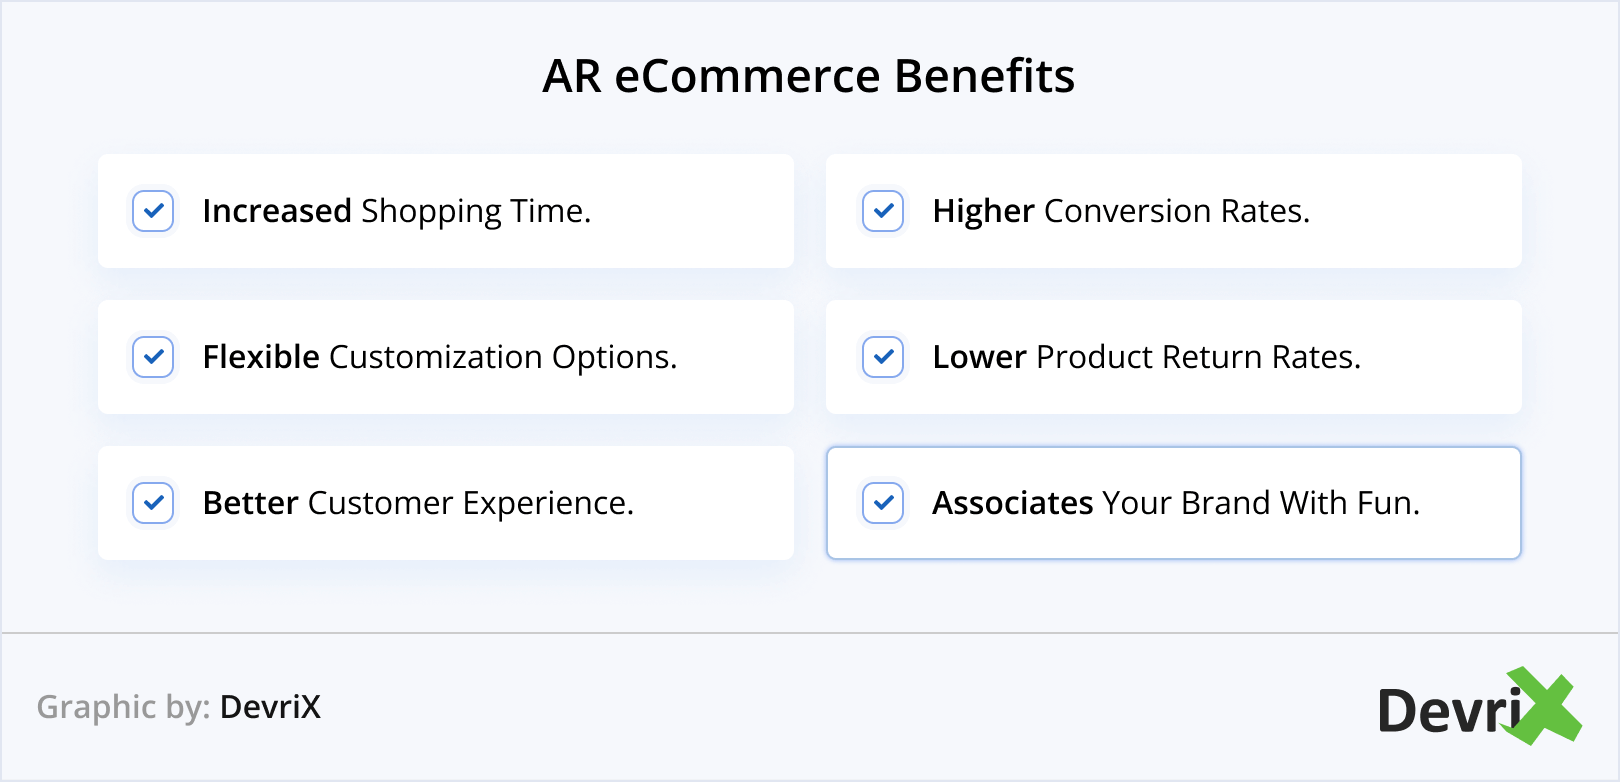 4. AR eCommerce Benefits